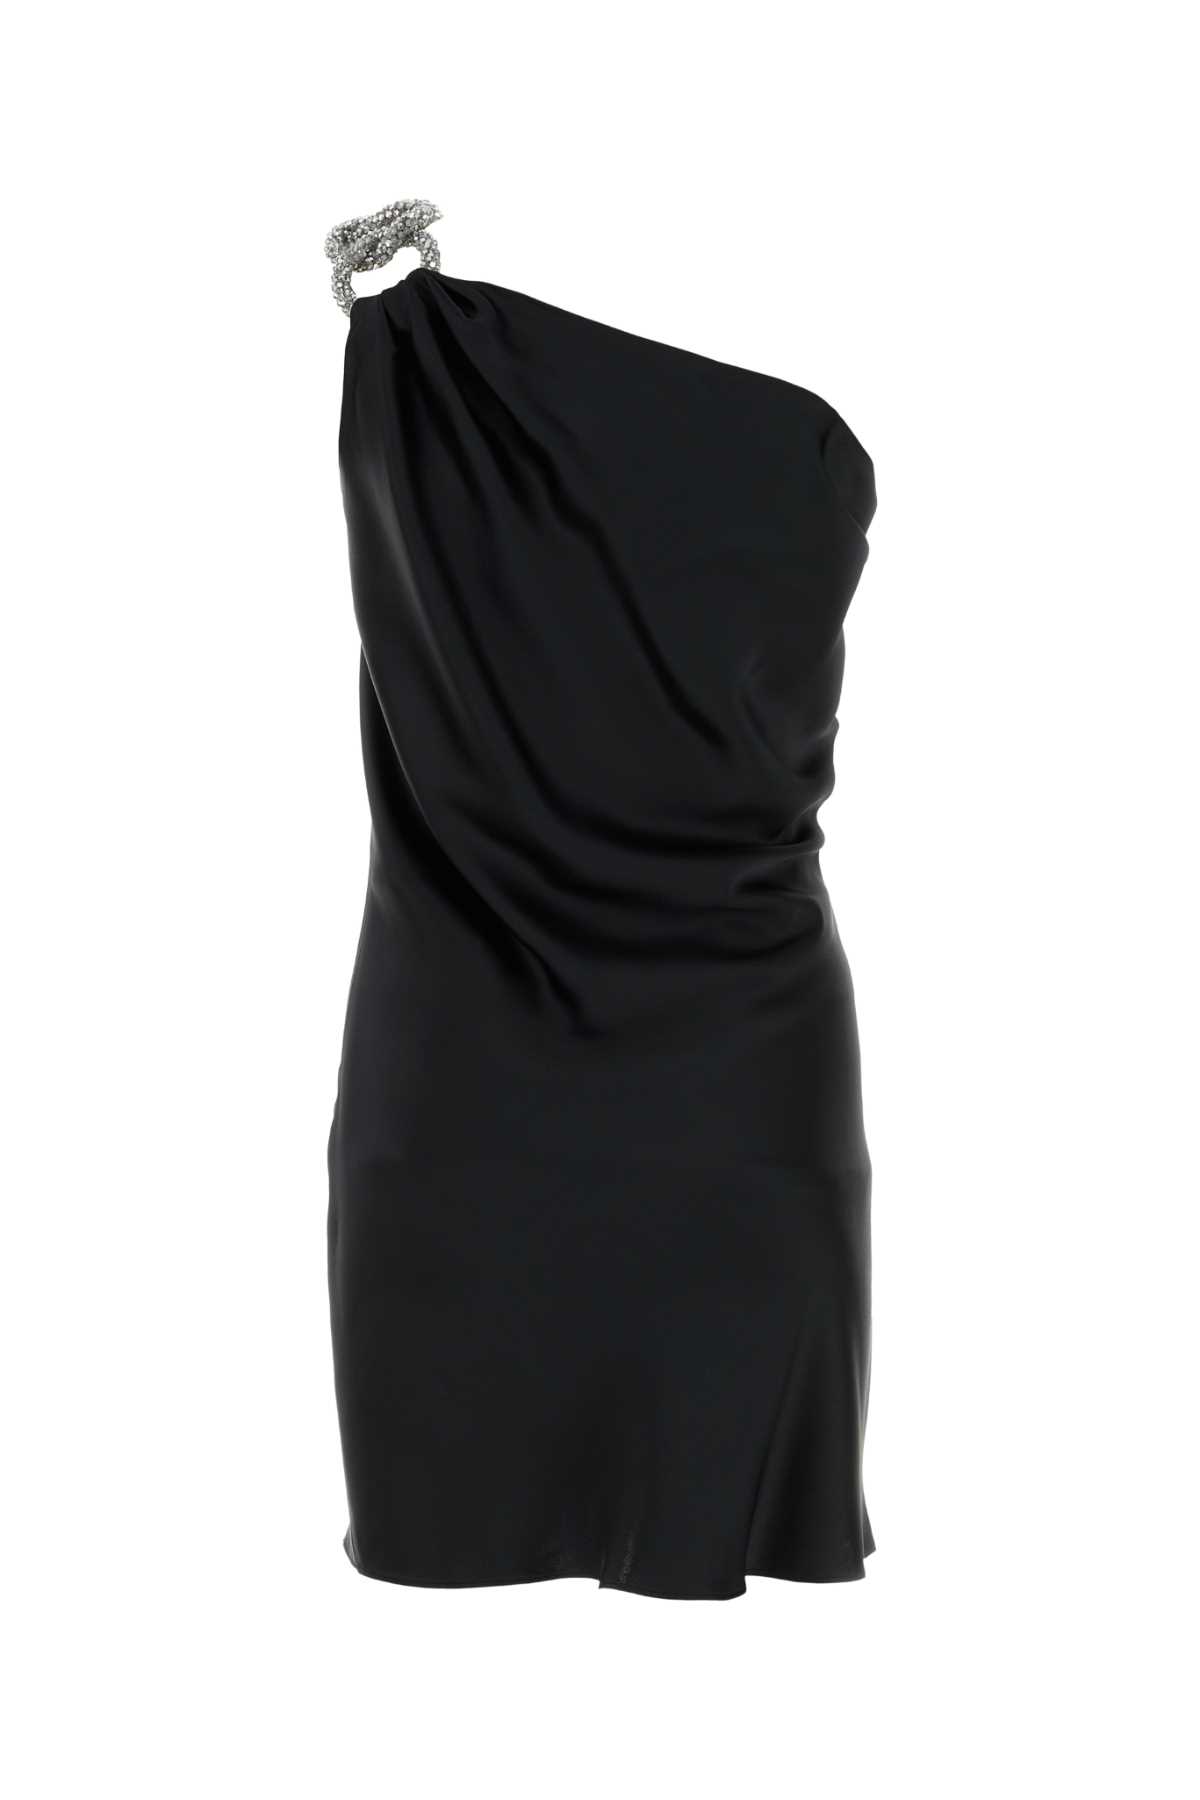 Stella Mccartney Black Satin Mini Dress